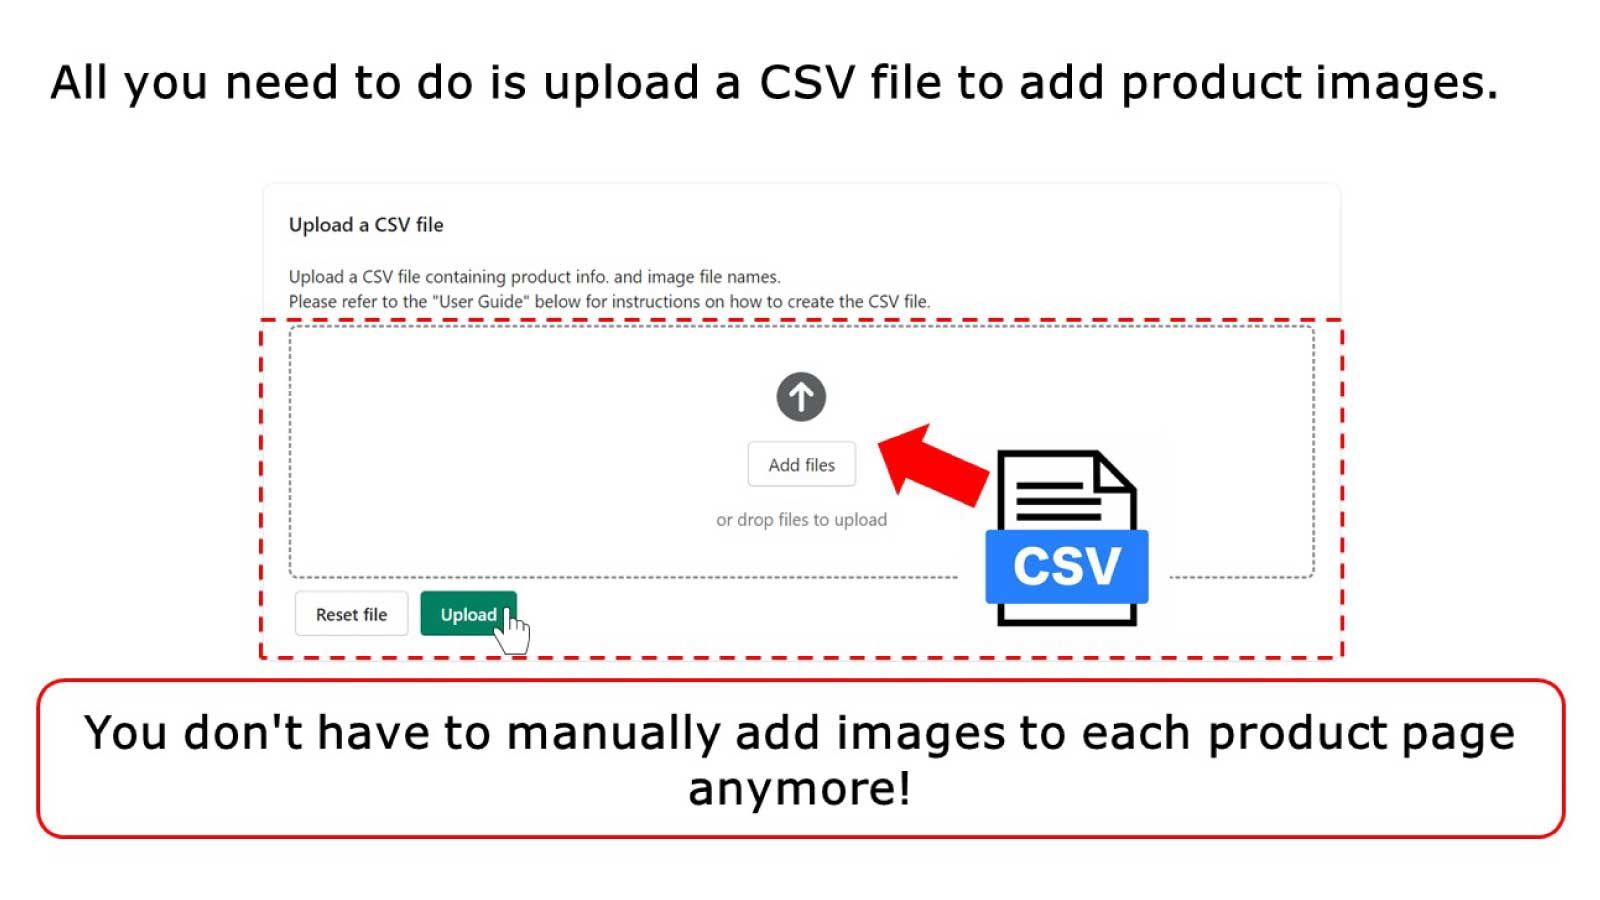 Feature 1: Upload a CSV file